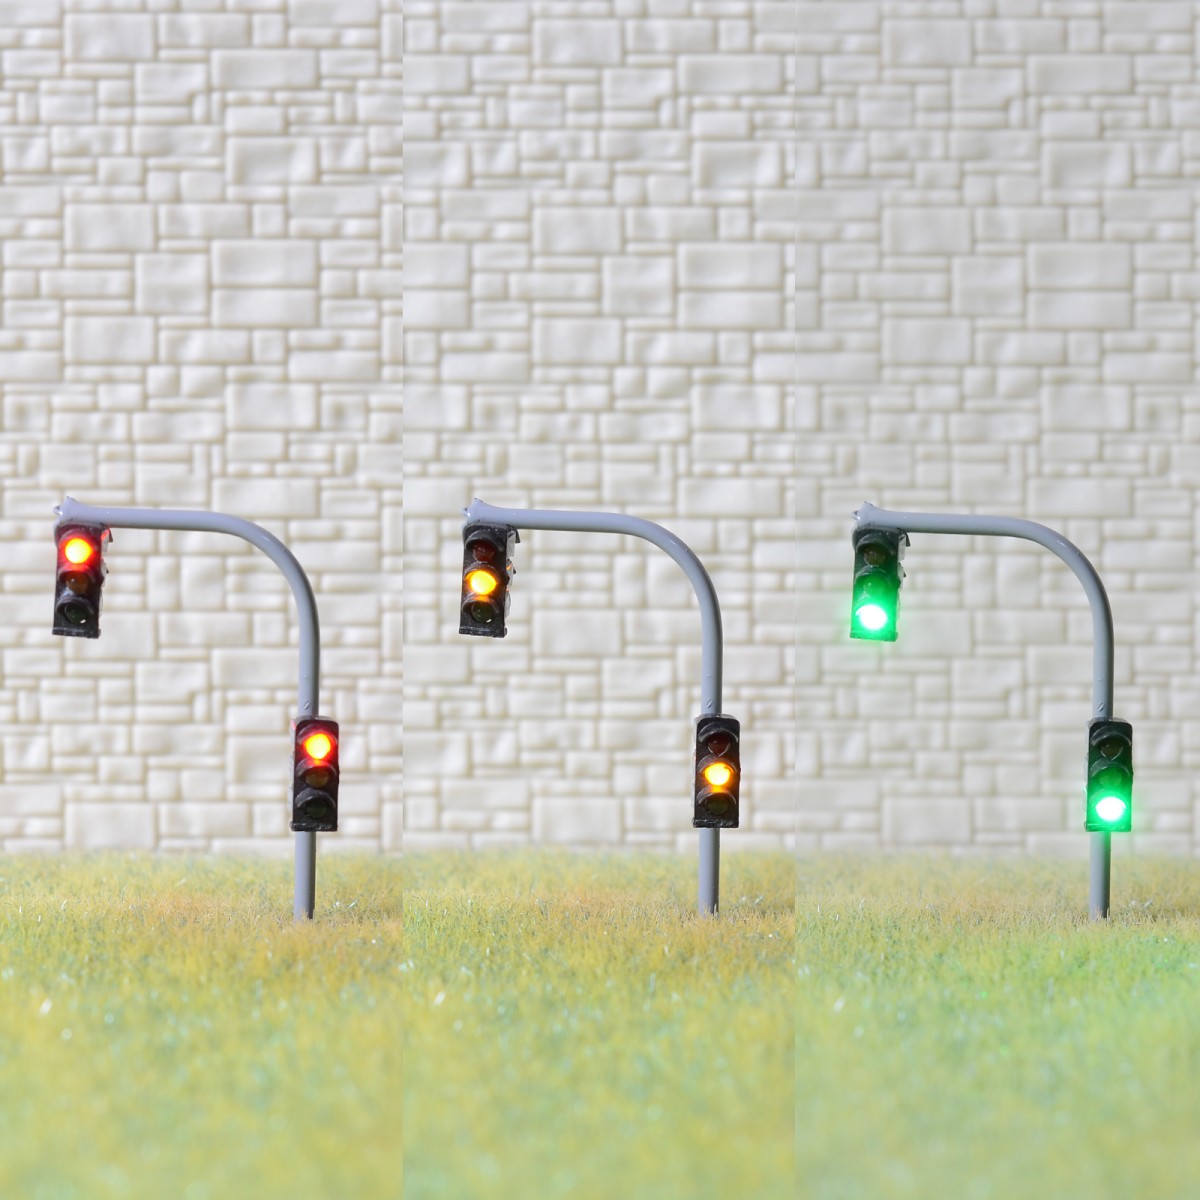 1 x traffic lights N crossing walk model LED pedestrian street signals #BB3C3NR 